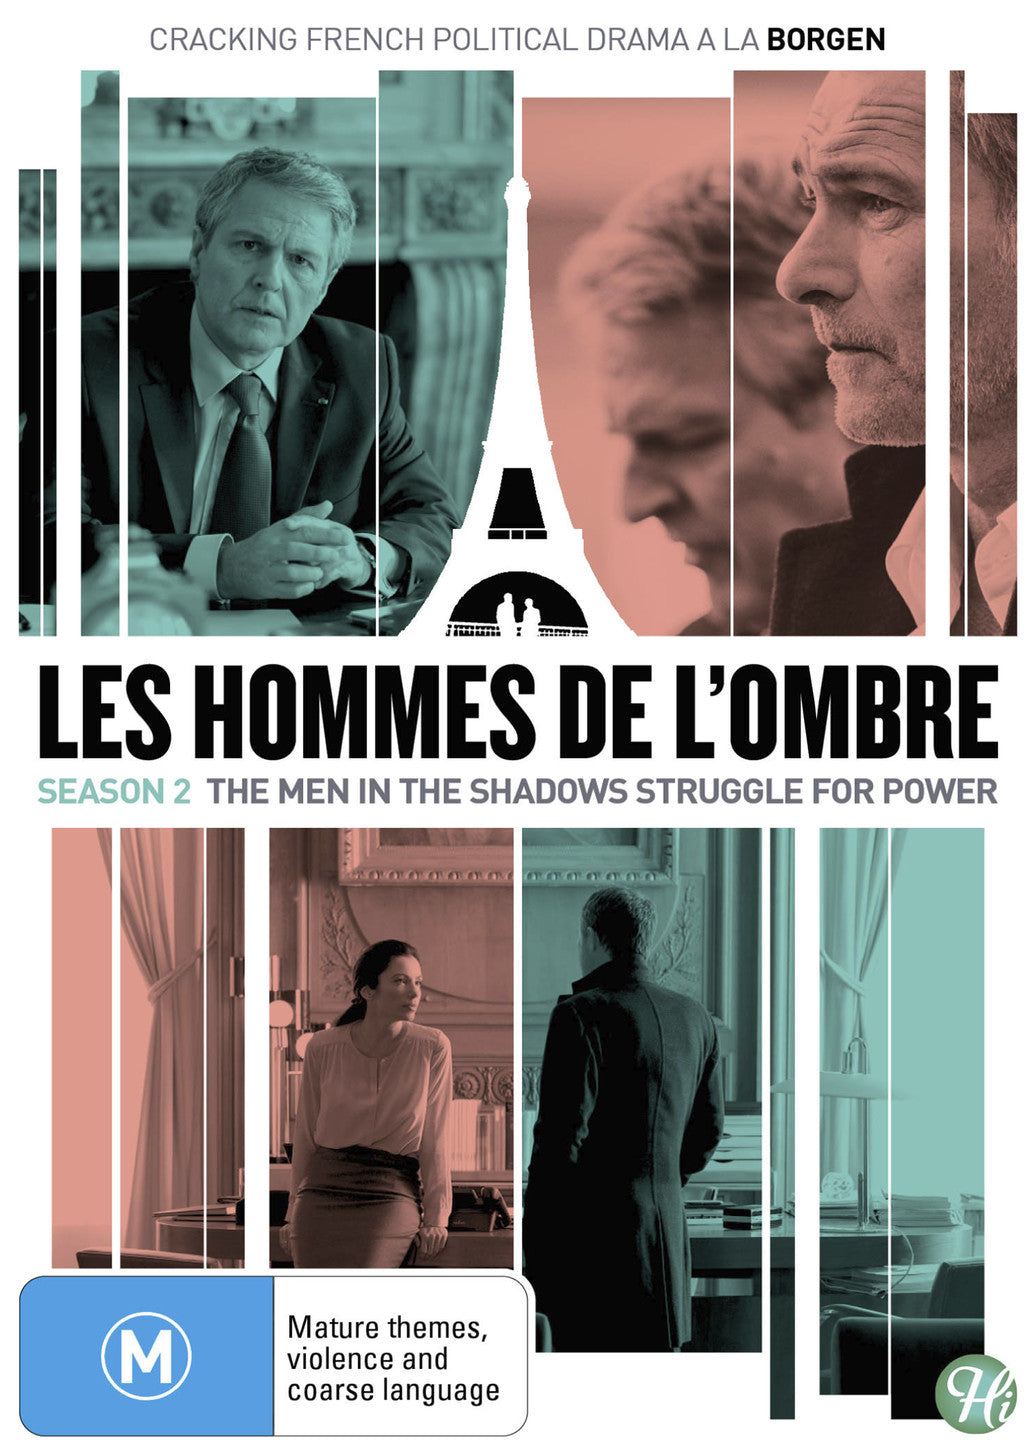 LES HOMMES DE L'OMBRE (THE SHADOW MEN) SEASON 2